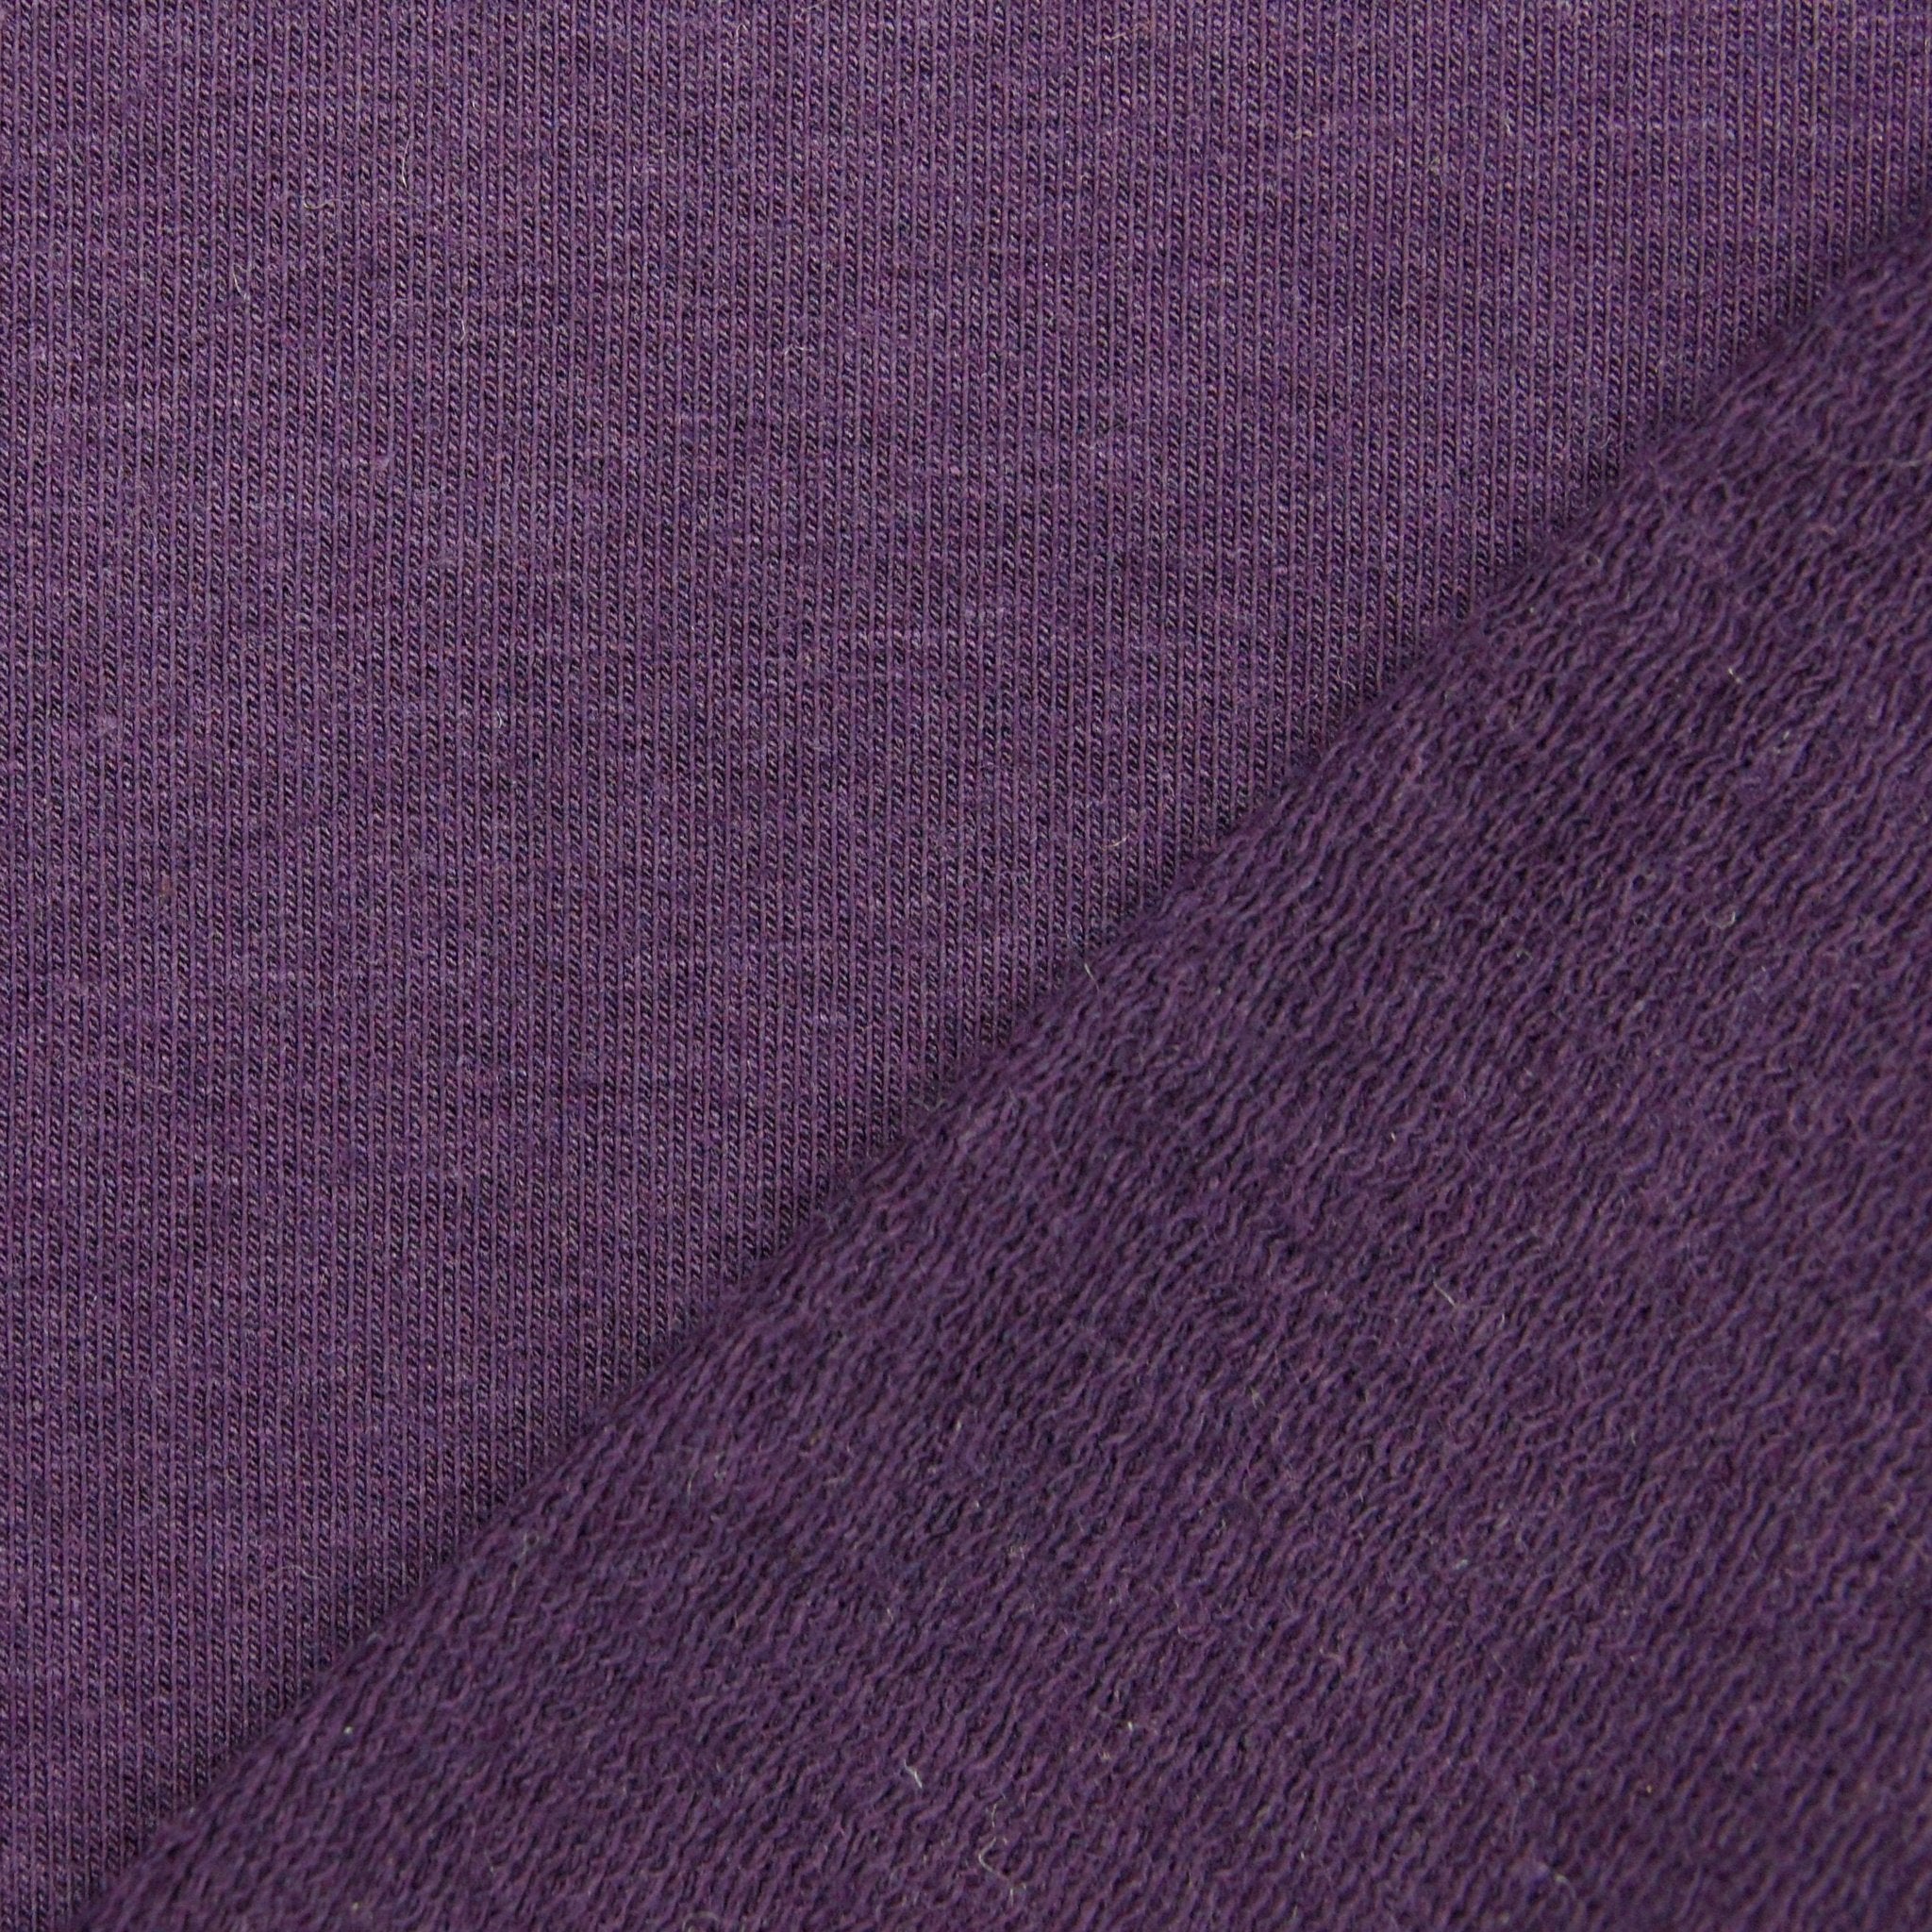 Tencel Organic Cotton Spandex French Terry Fabric - Plum - Knit - Earth Indigo